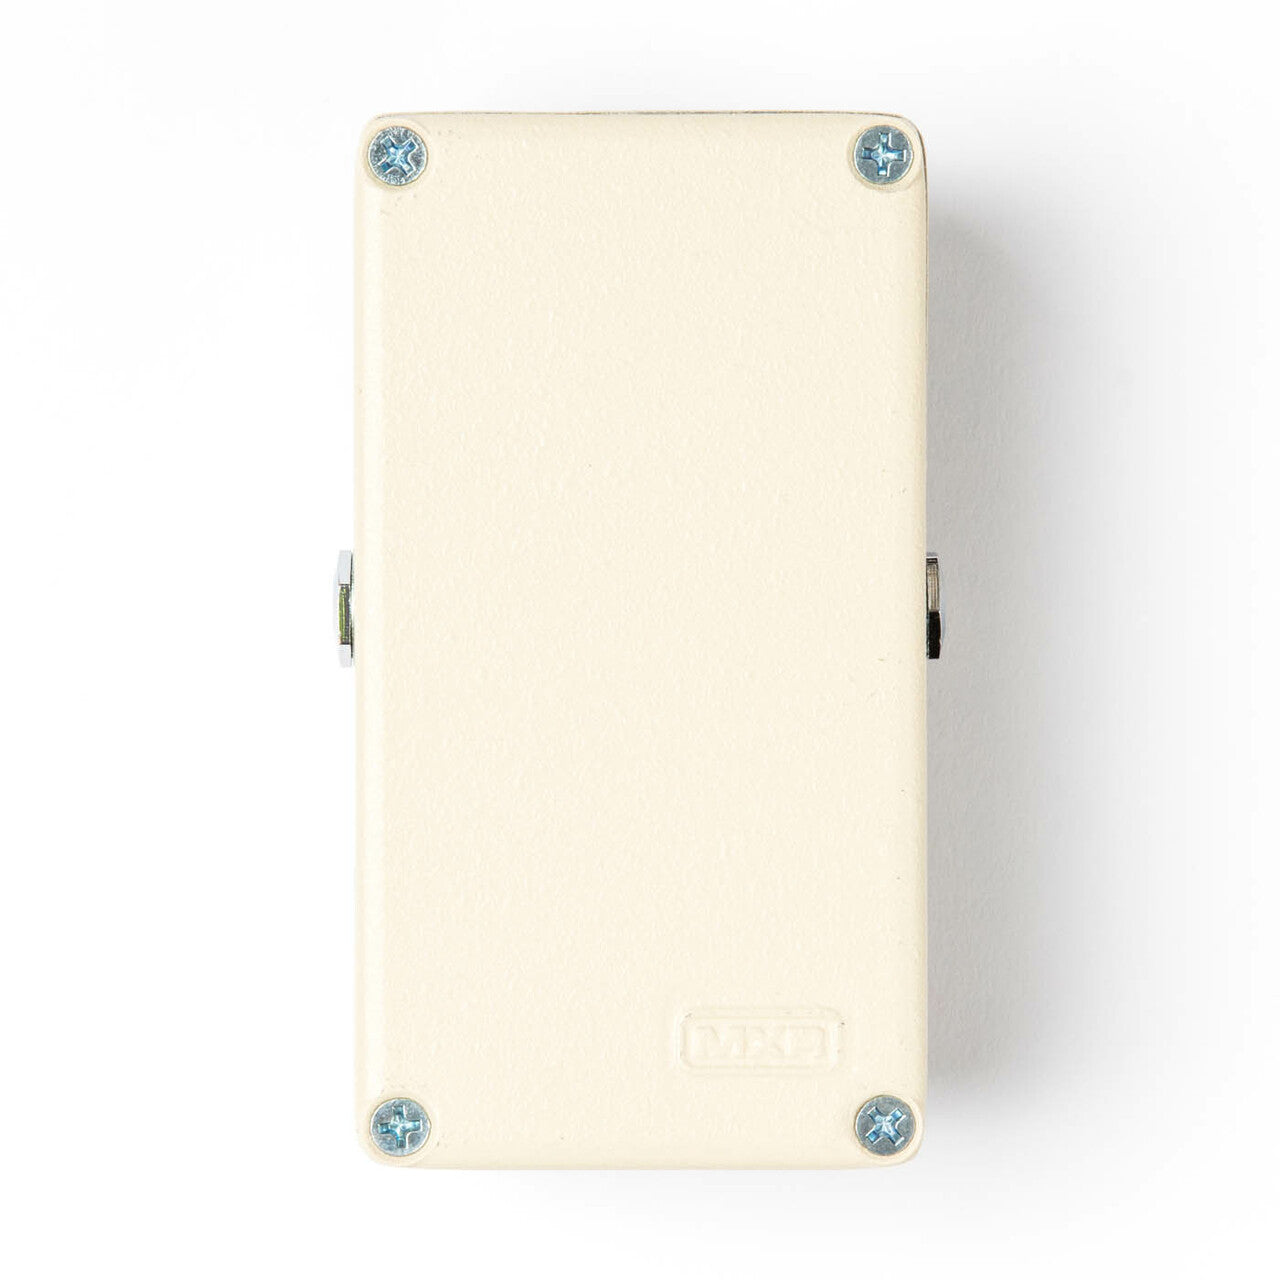 Jim Dunlop MXR M133 Micro Amp Gain / Boost Pedal (M-133 / M 133), MXR, EFFECTS, mxr-effects-m133, ZOSO MUSIC SDN BHD